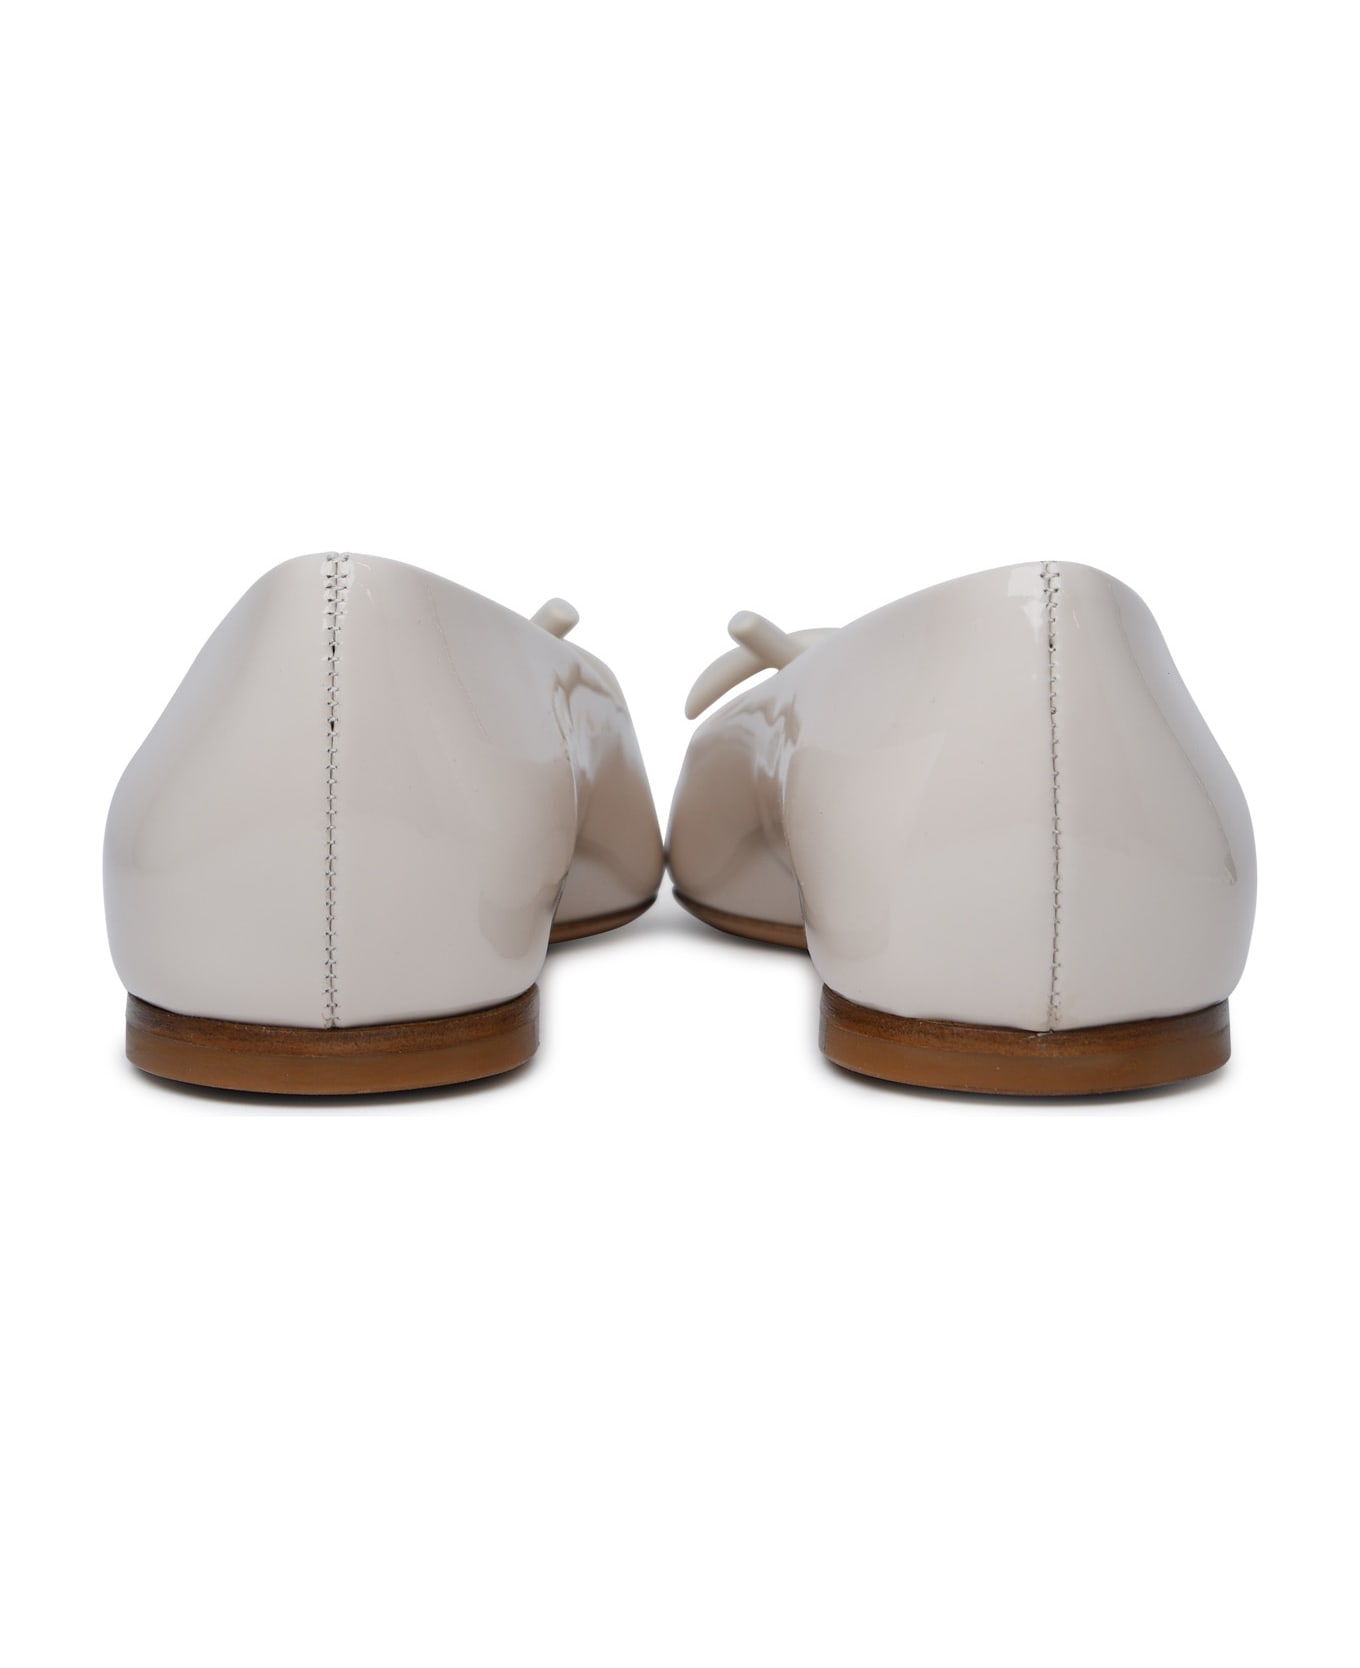 Ferragamo 'annie' Ballet Flats In Mascarpone Calf Leather - Cream